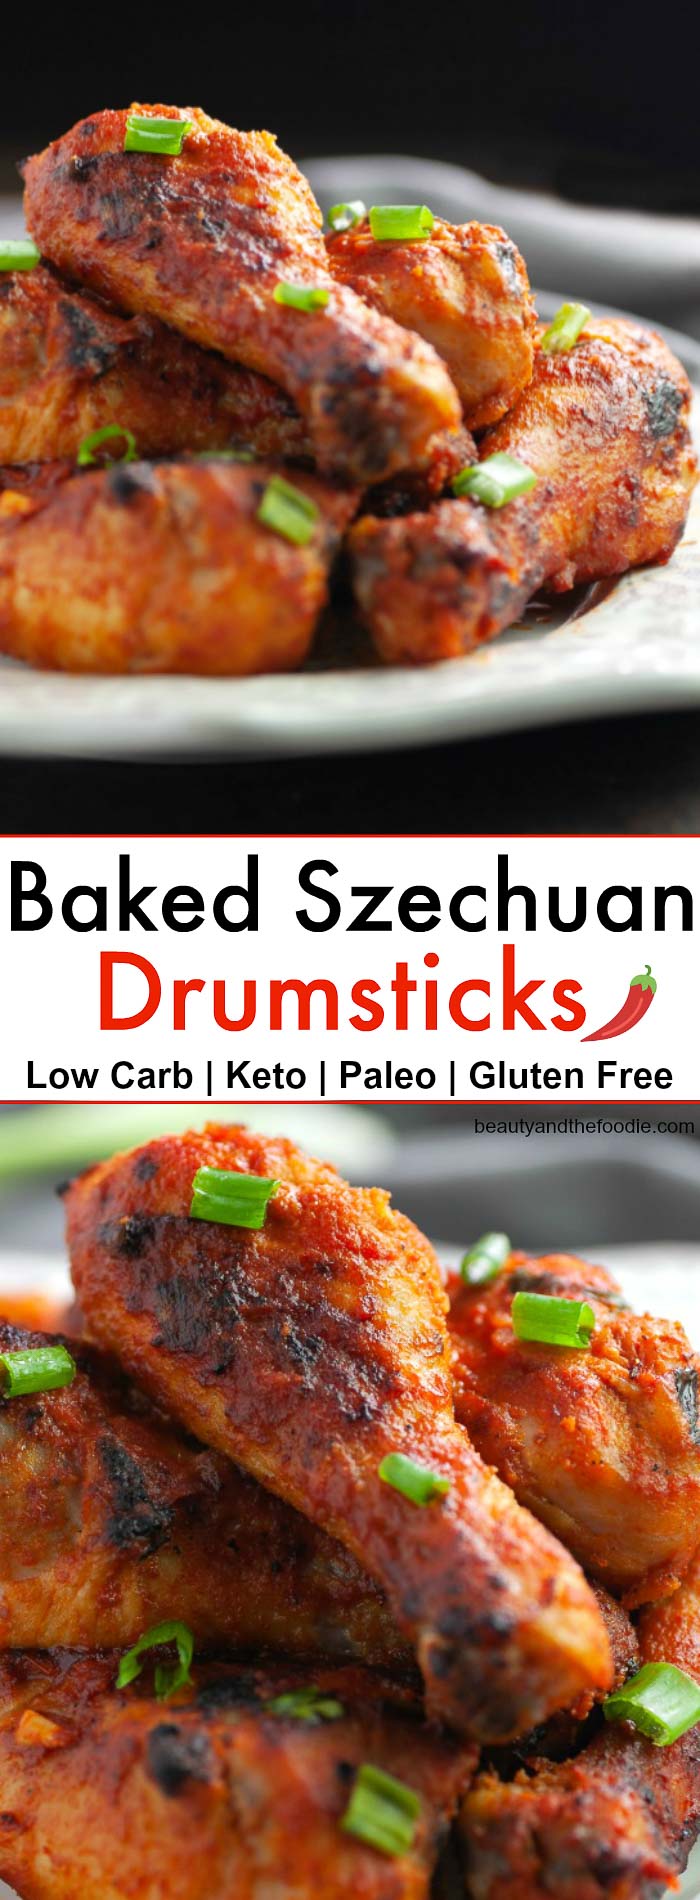 Baked Szechuan Drumsticks Low Carb #steviva, #sweetandeasy